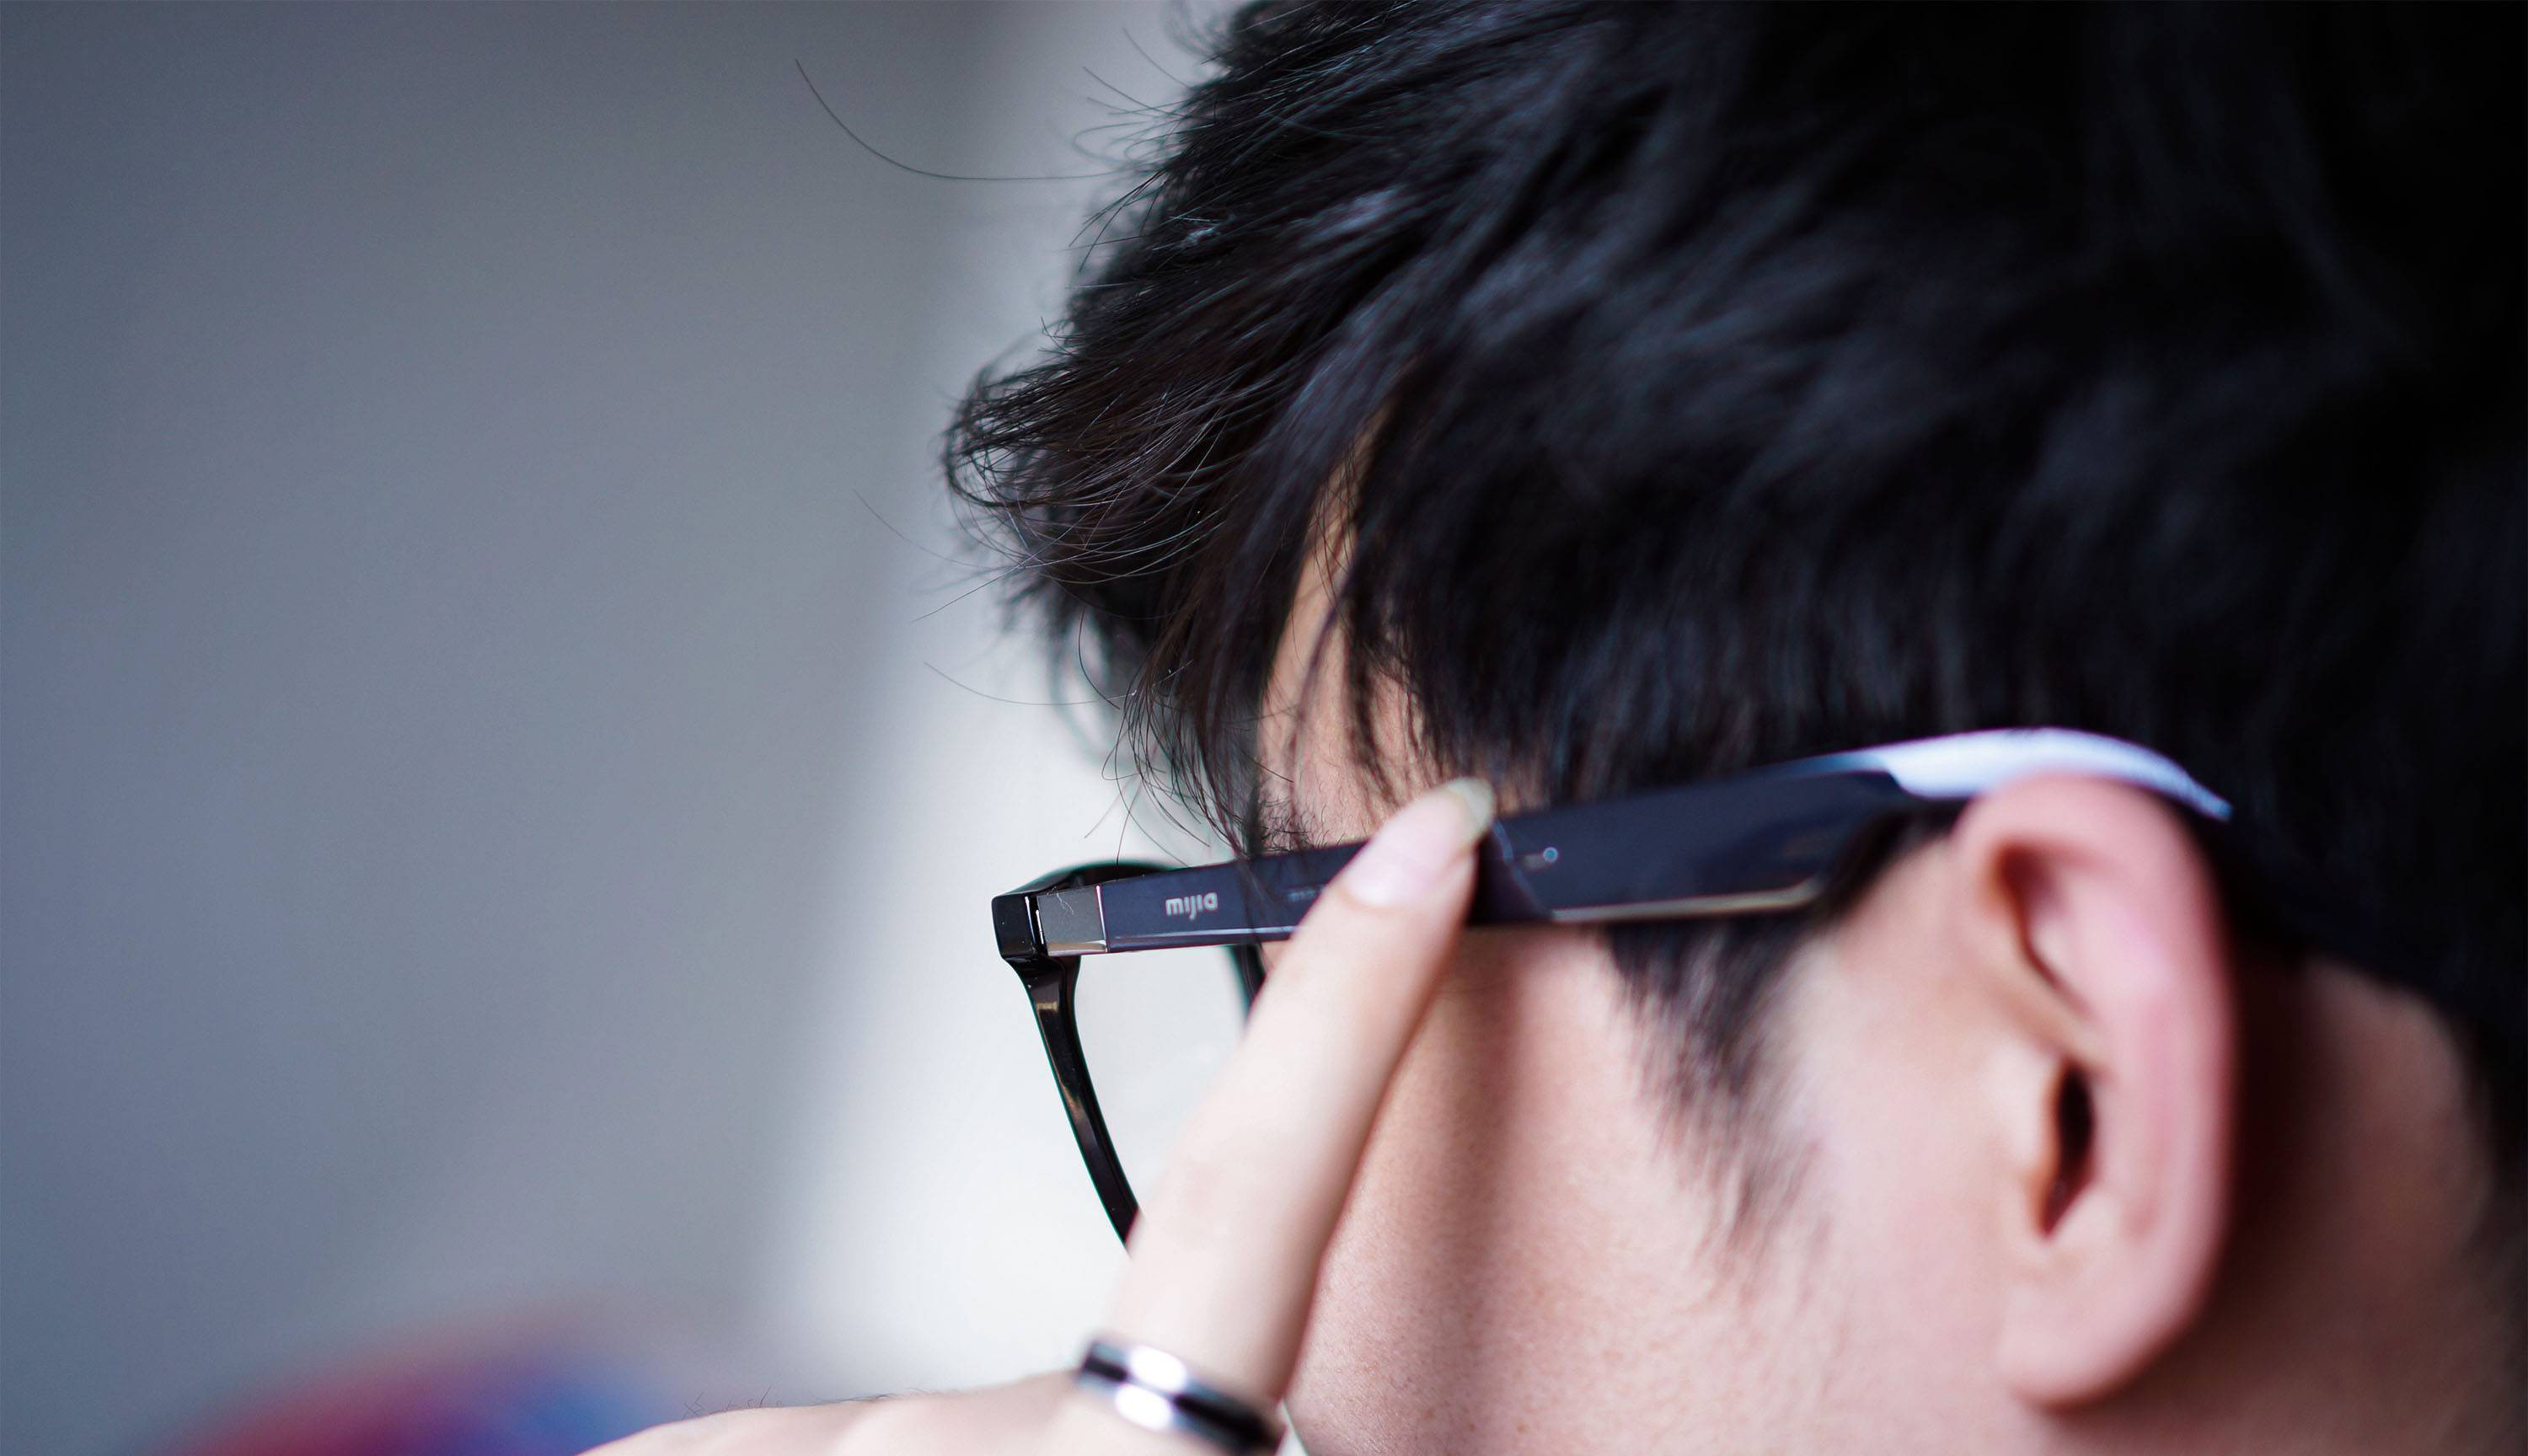 Mijia Smart Audio Glasses Review